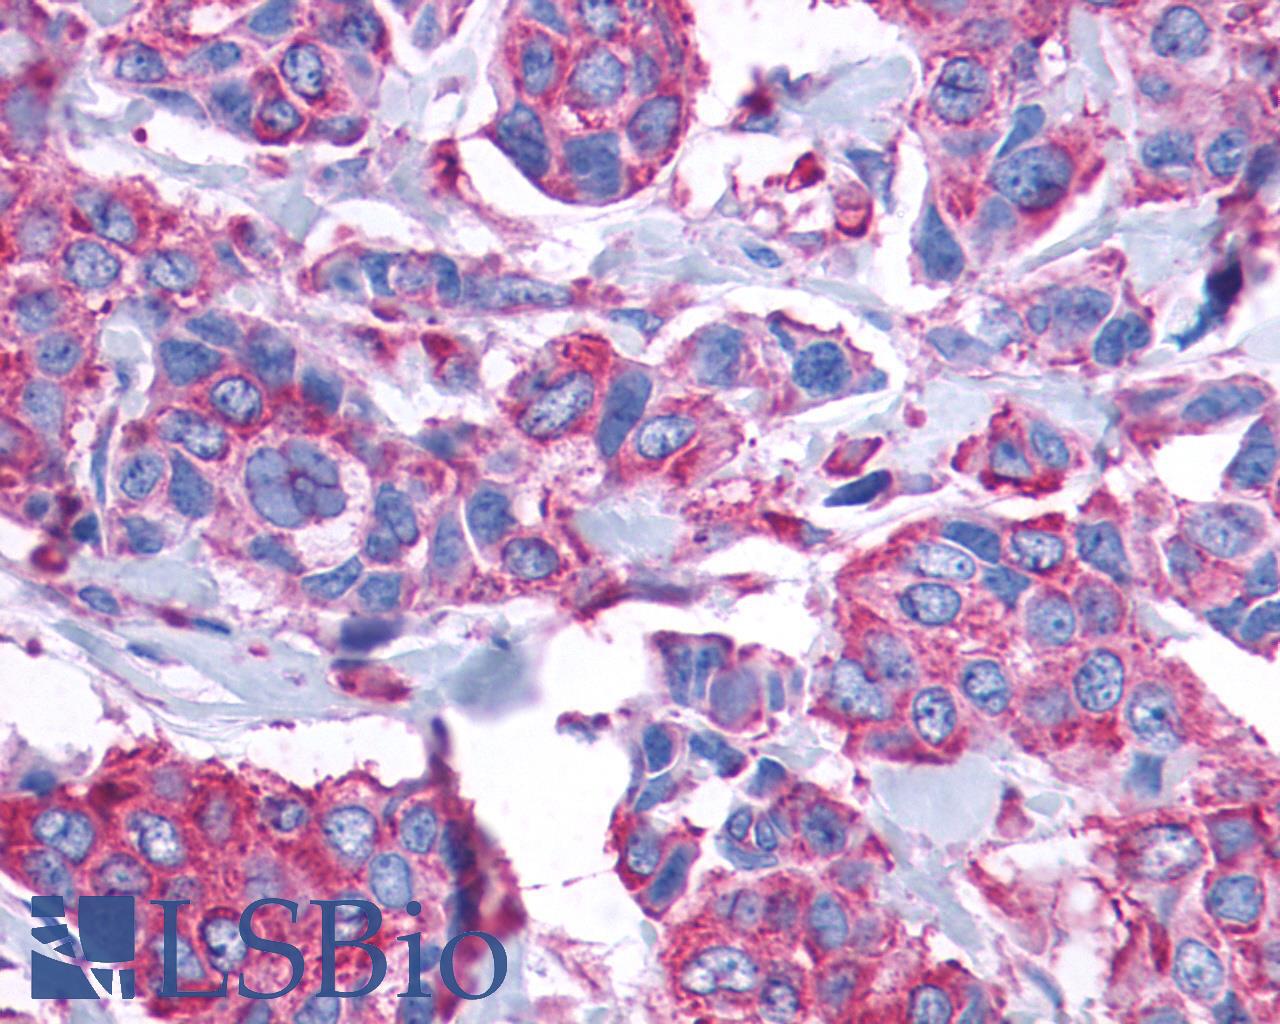 GPR132 / G2A Antibody - Breast, Carcinoma